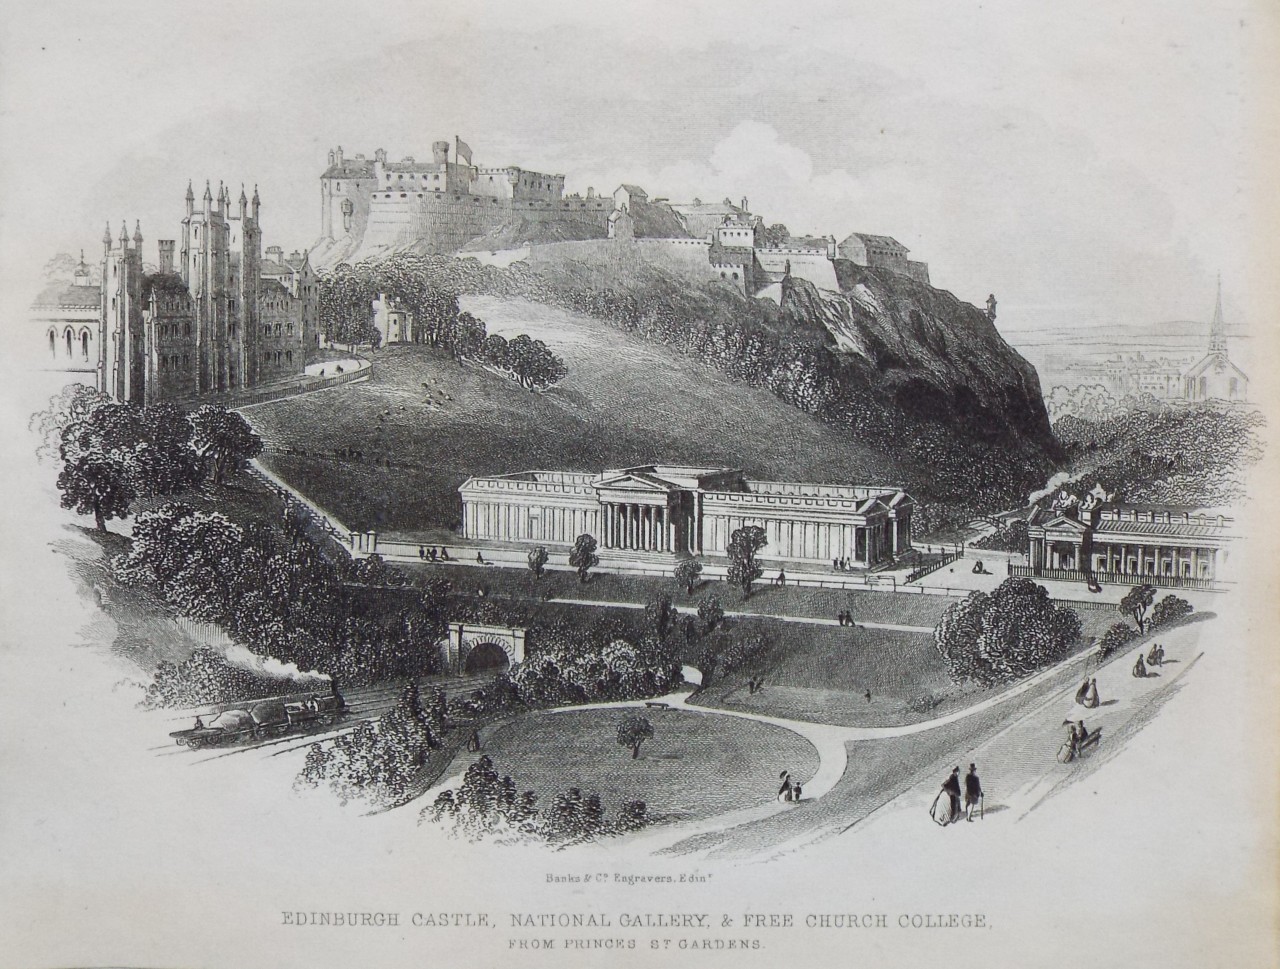 Steel Vignette - Edinburgh Castle, National Gallery, & Free Church College, from Princes St. Gardens. - Banks